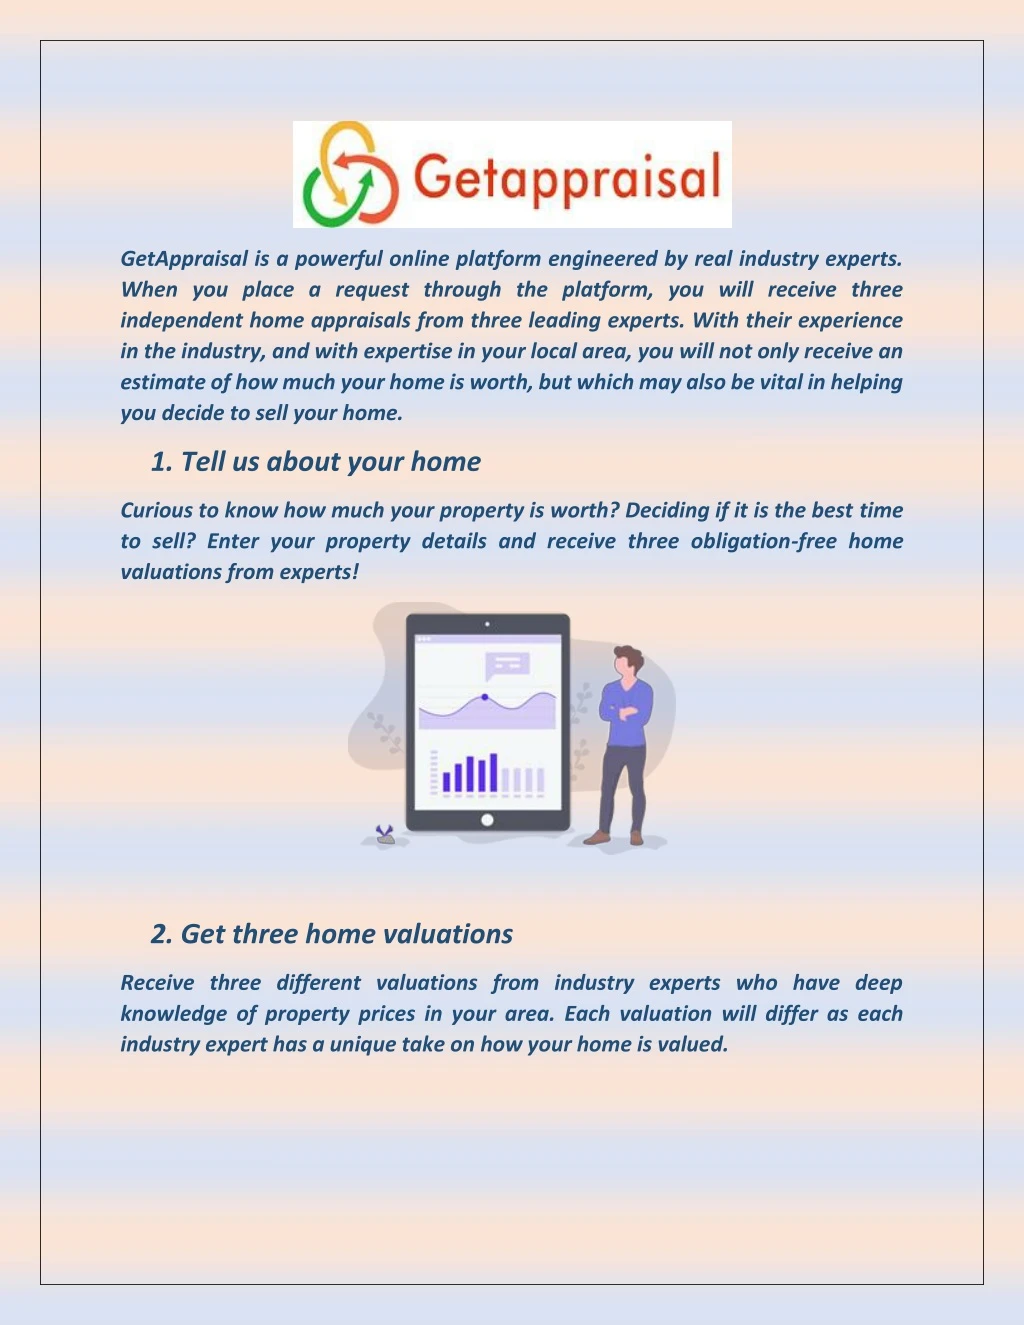 getappraisal is a powerful online platform